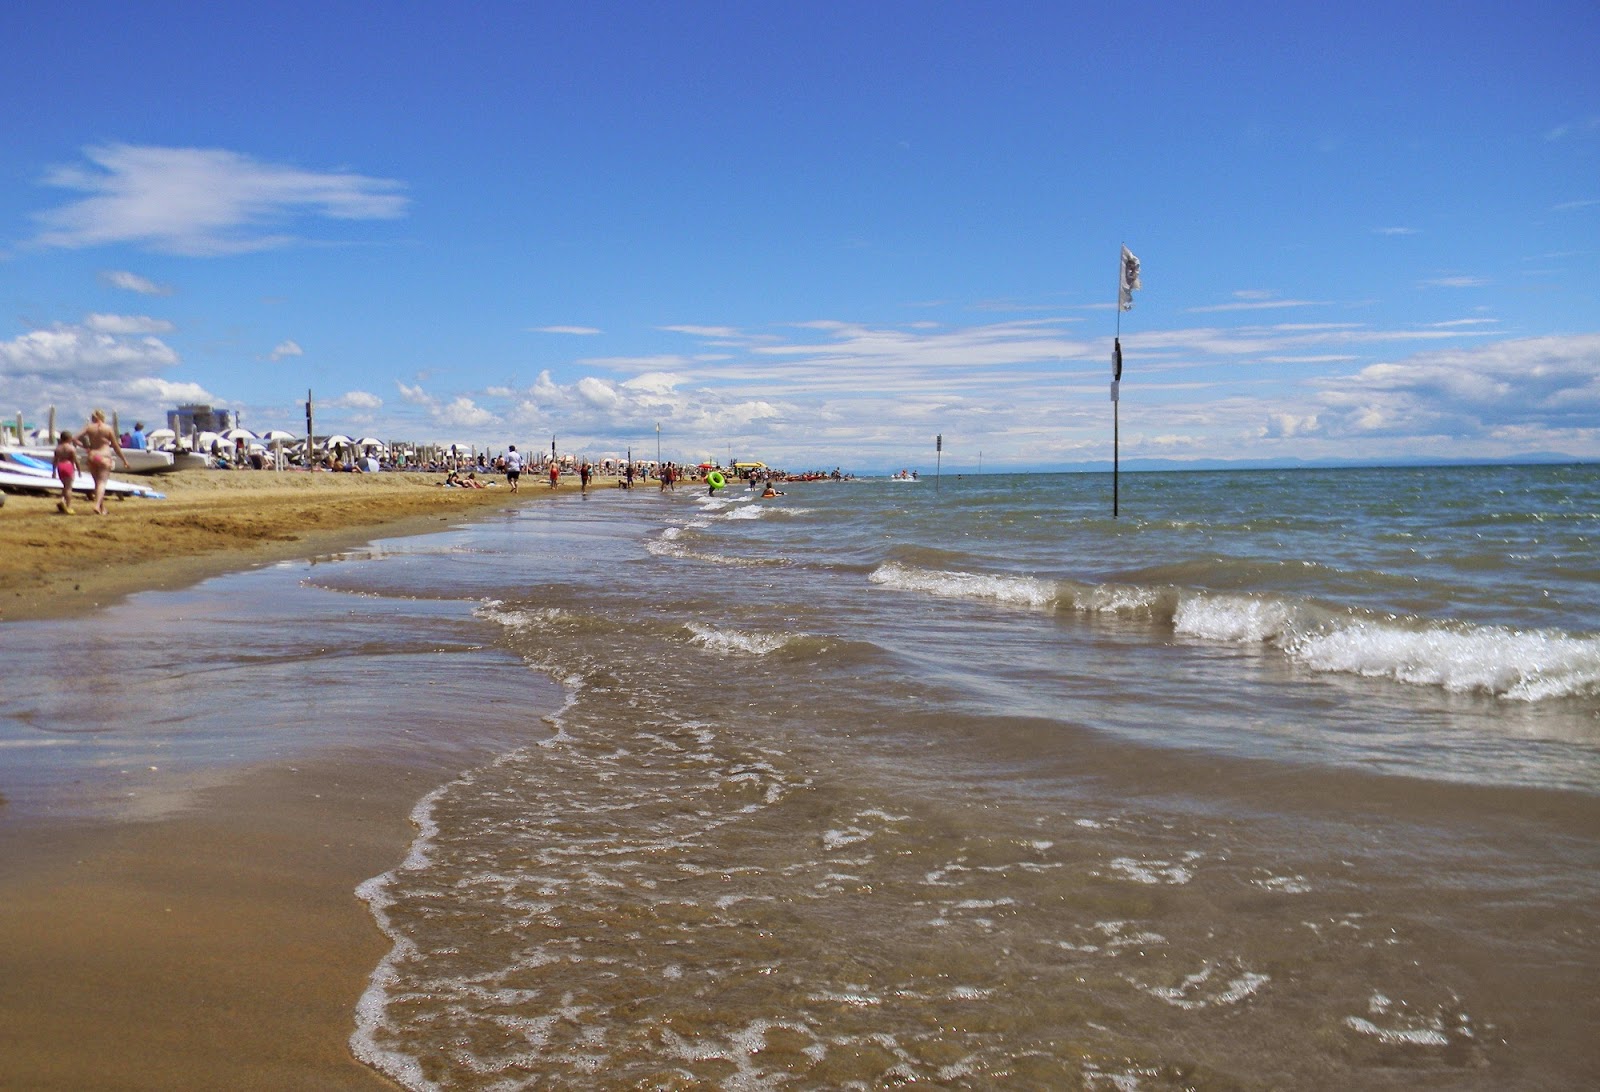 Foto de Spiaggia libera Bibione con recta y larga